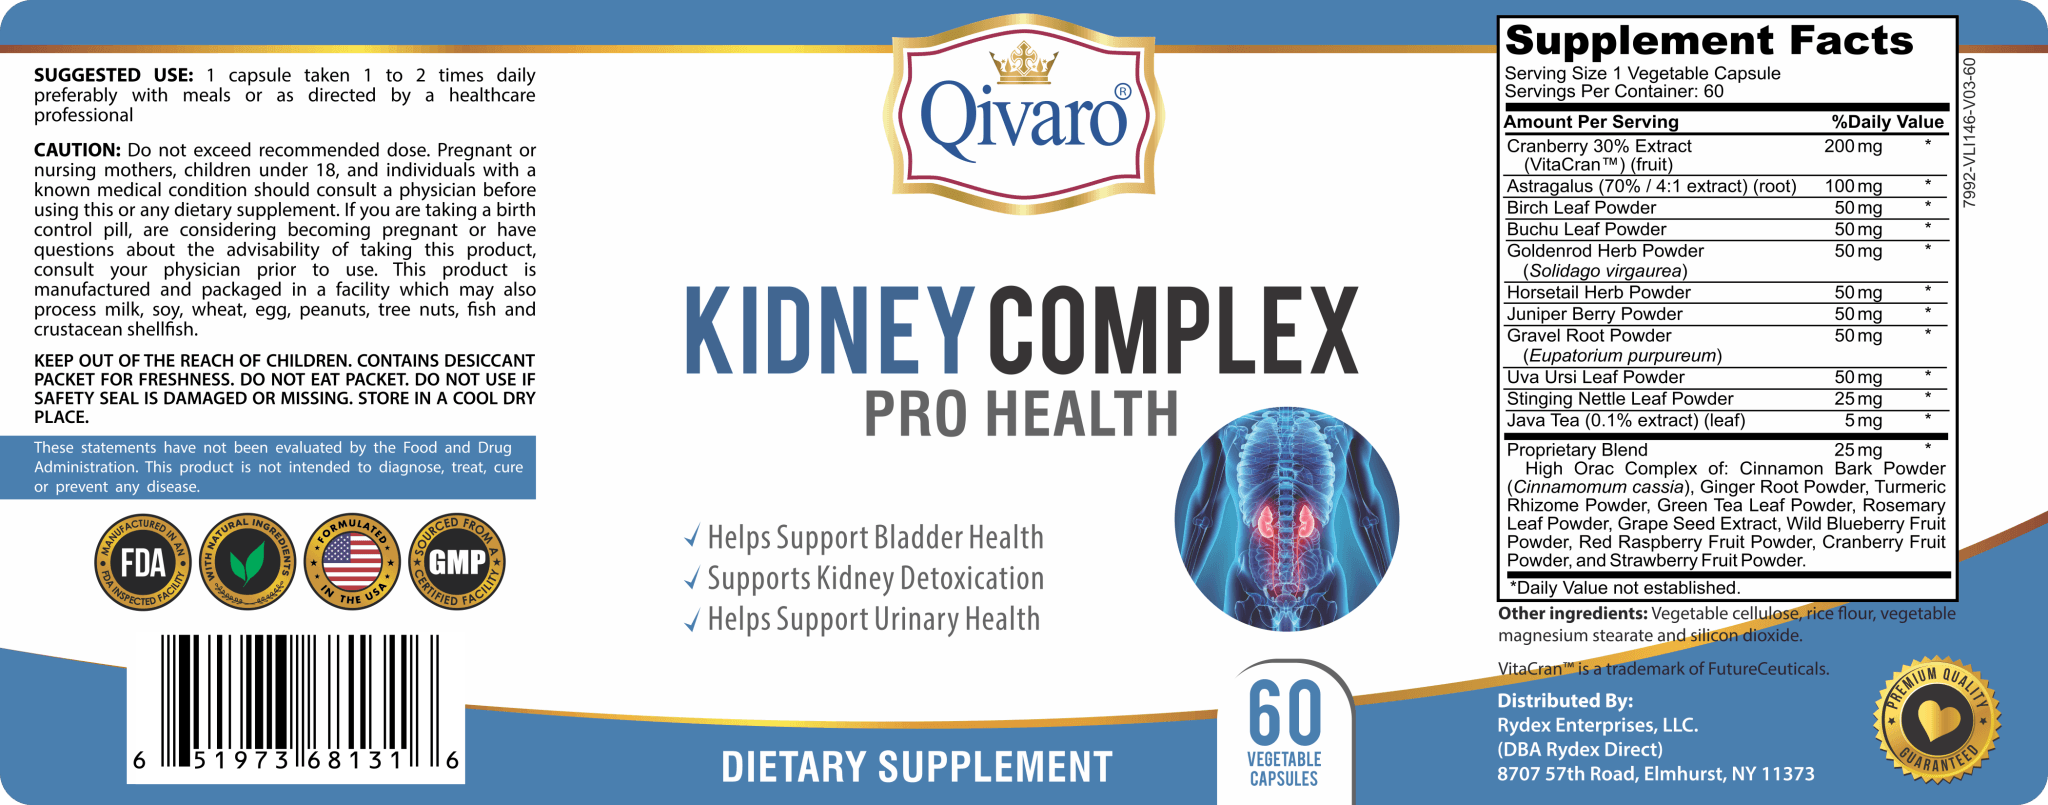 Kidney Complex Pro Health By Qivaro - (60 veggie caps) - Qivaro USA